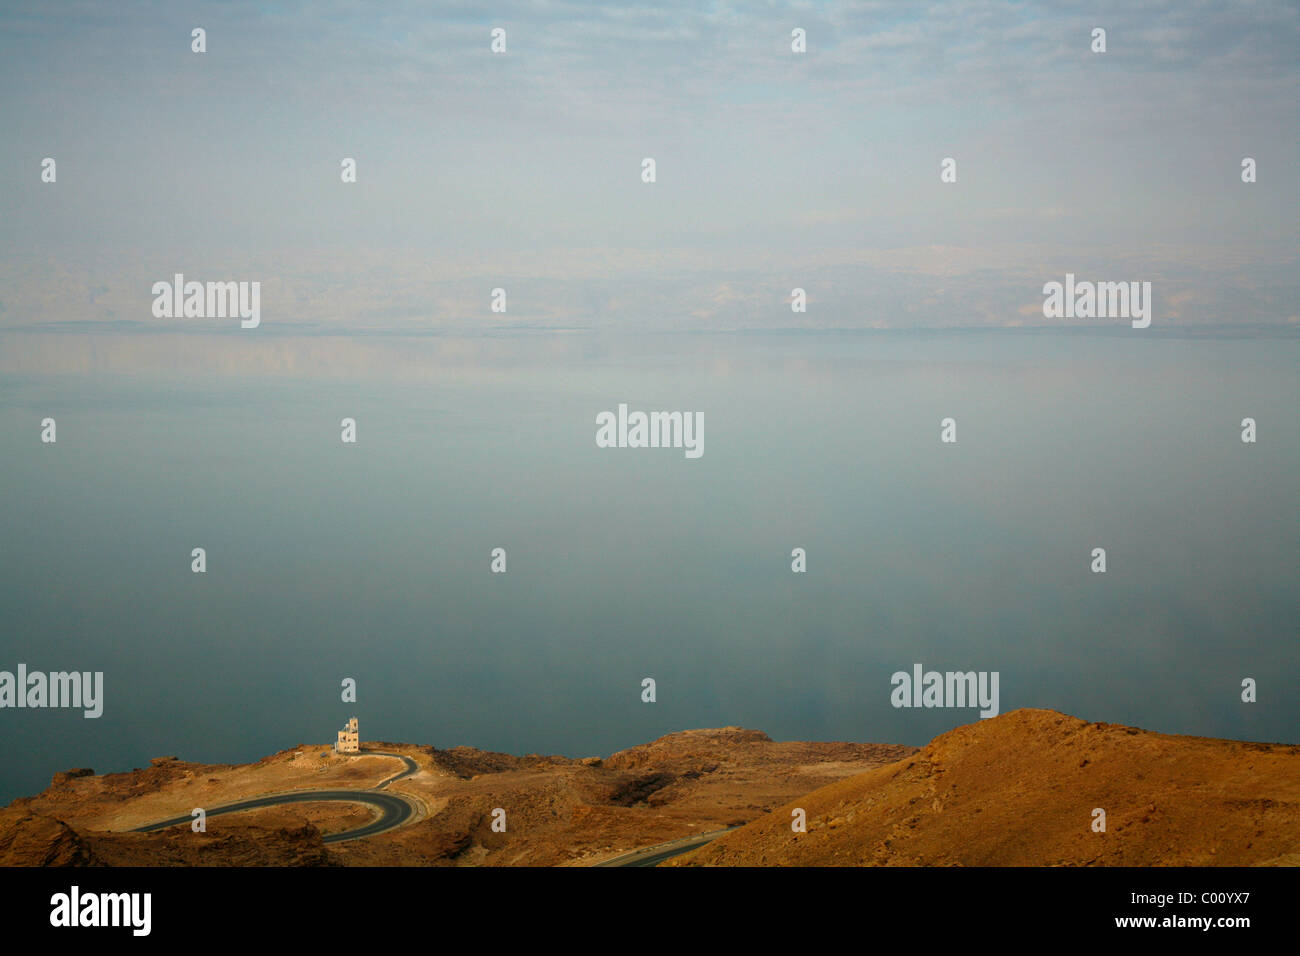 View over the dead sea, Jordan. Stock Photo